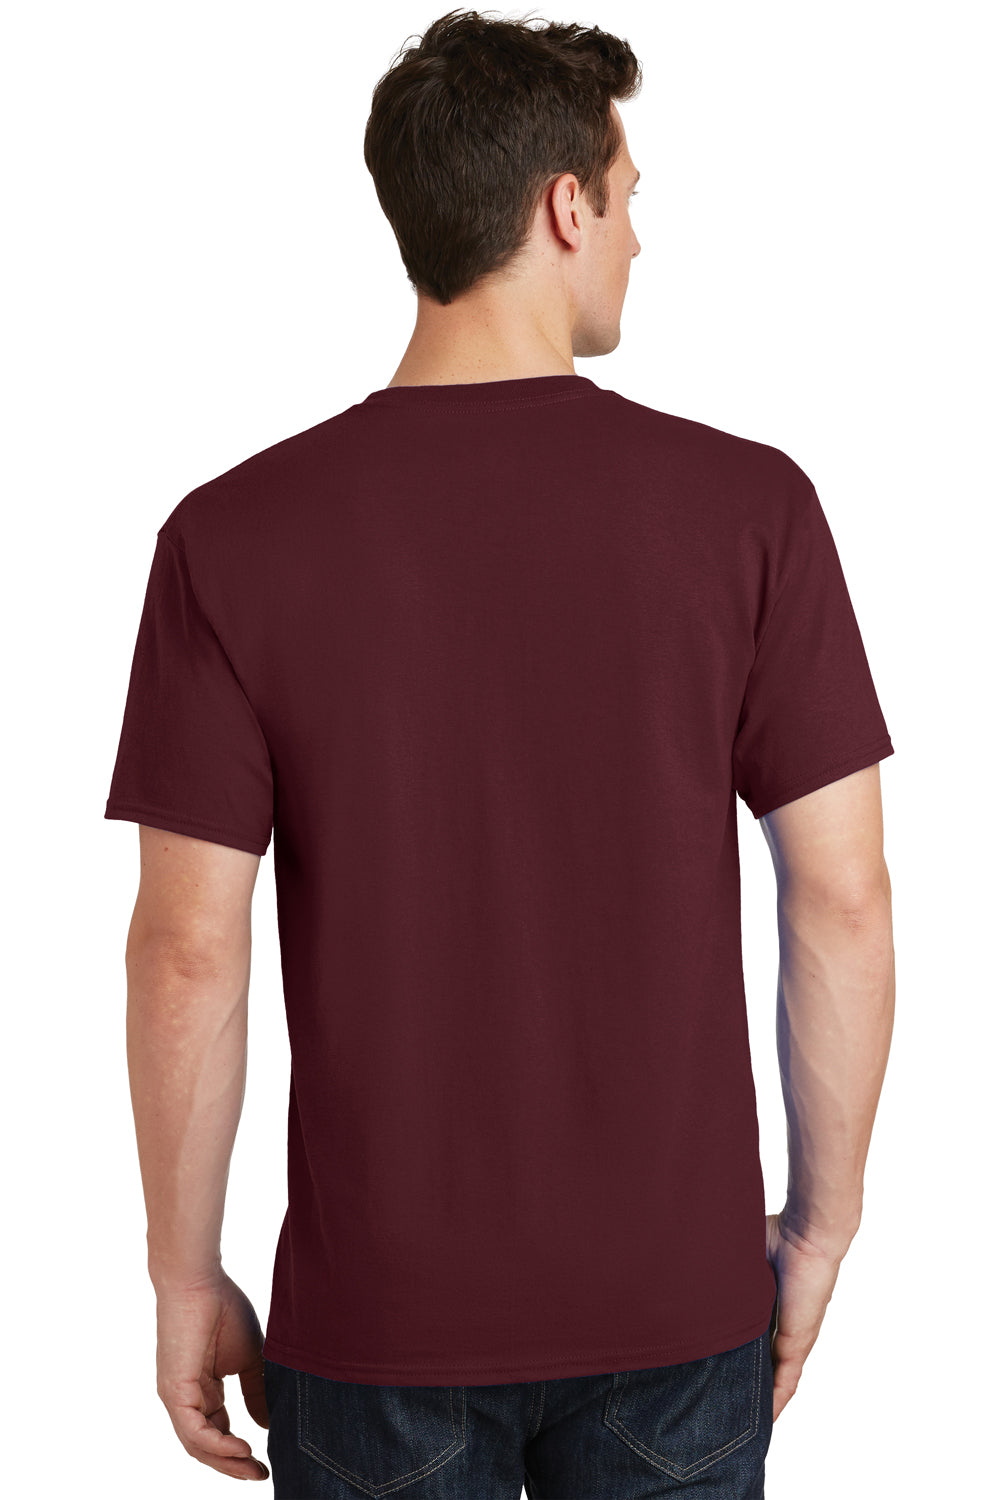 Port & Company PC54 Mens Core Short Sleeve Crewneck T-Shirt Maroon Back